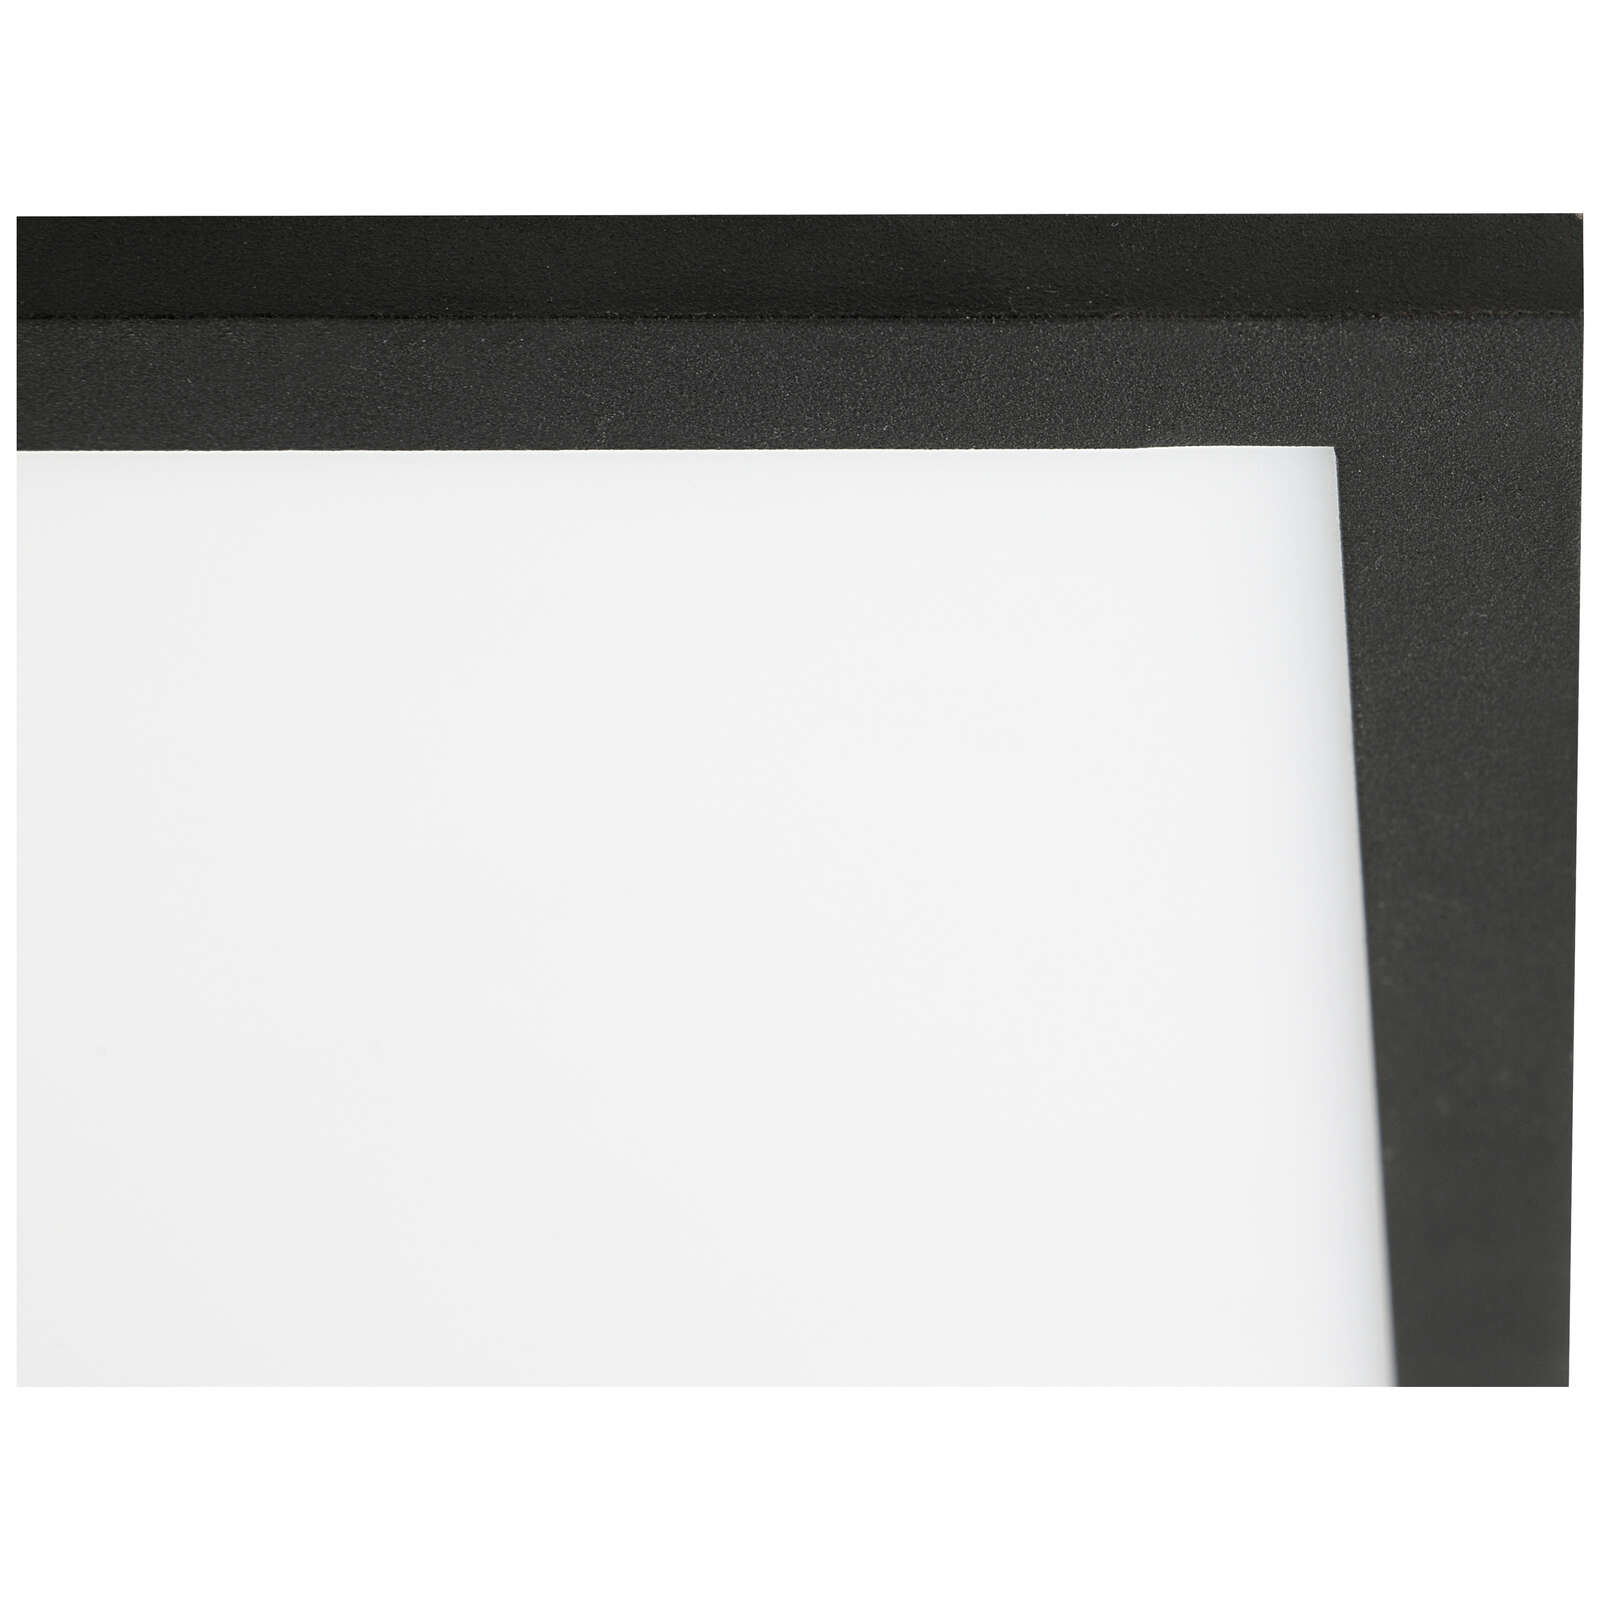             Panel metálico de superficie - Constantin 15 - Negro
        